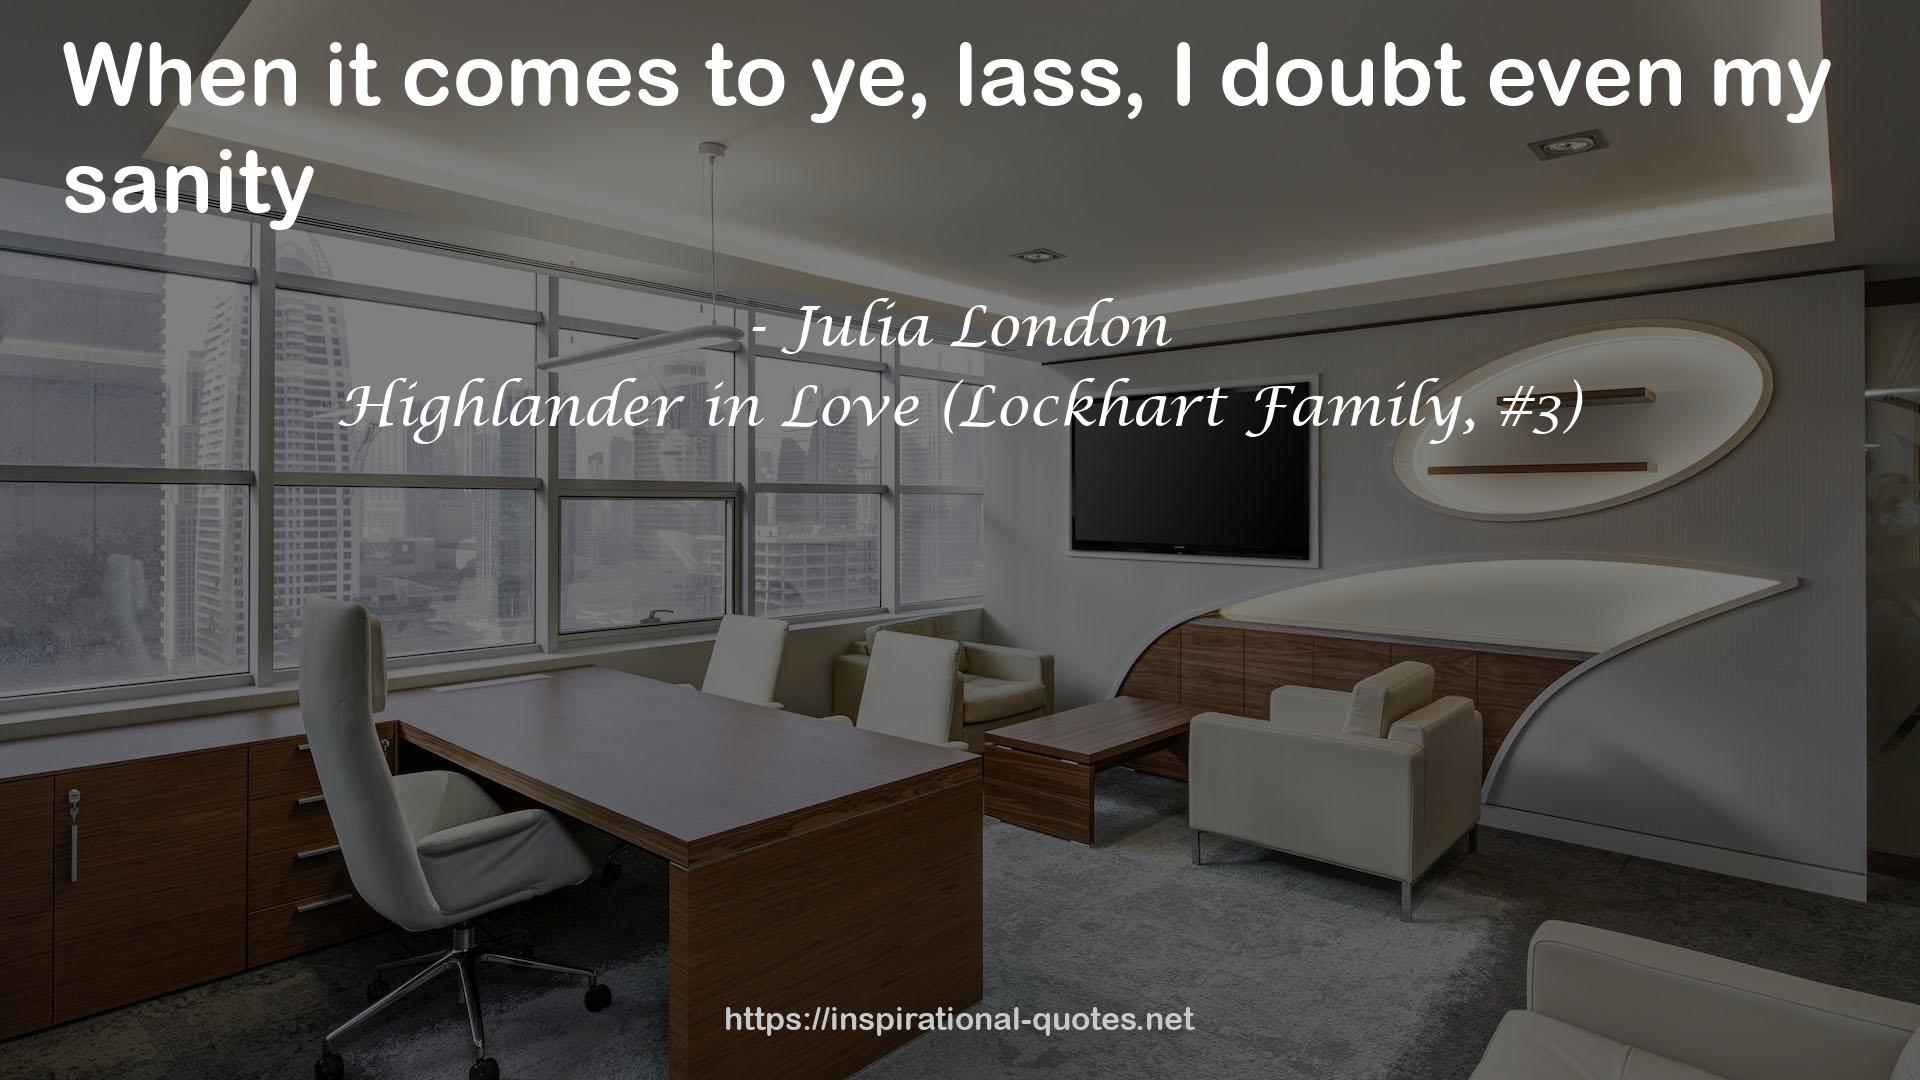 Highlander in Love (Lockhart Family, #3) QUOTES